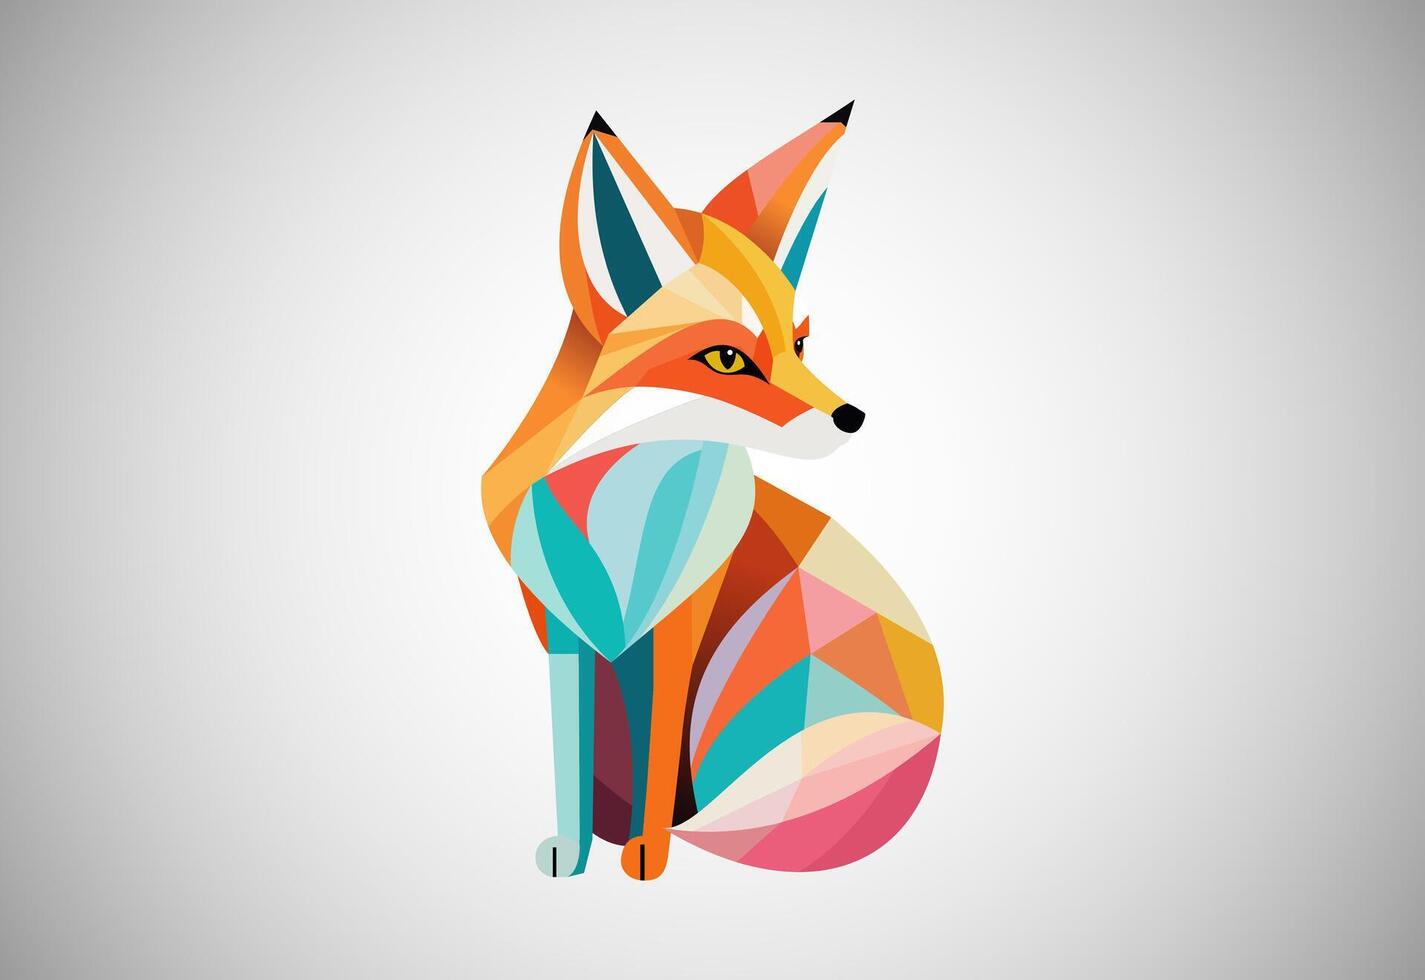 Geometric fox logo design vector illustration. Animal logo